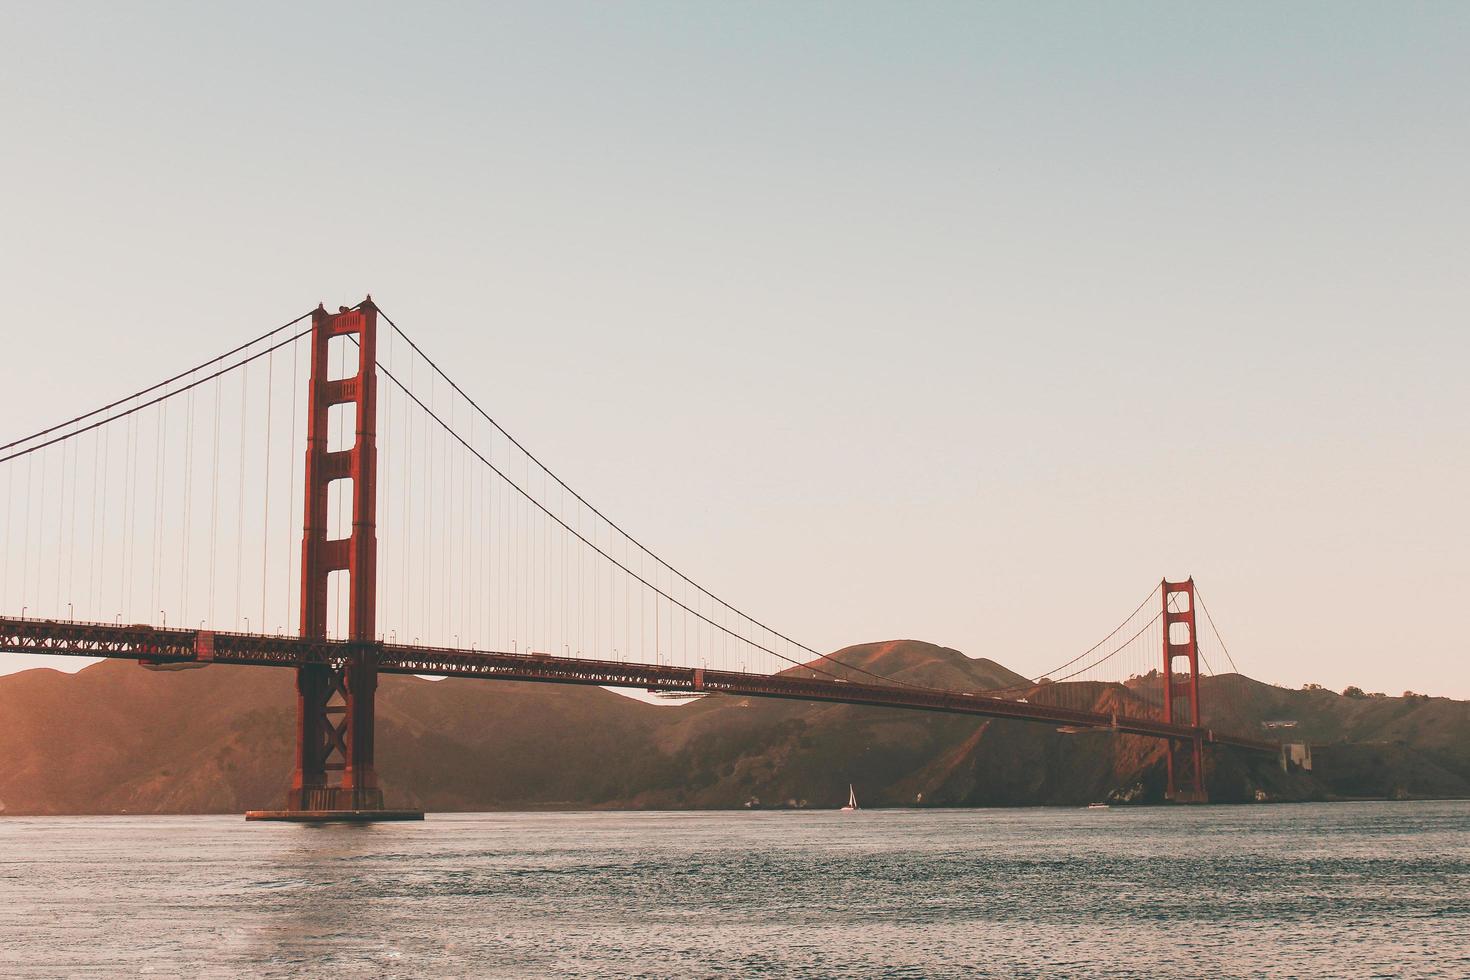 Golden Gate Bridge at sunset photo